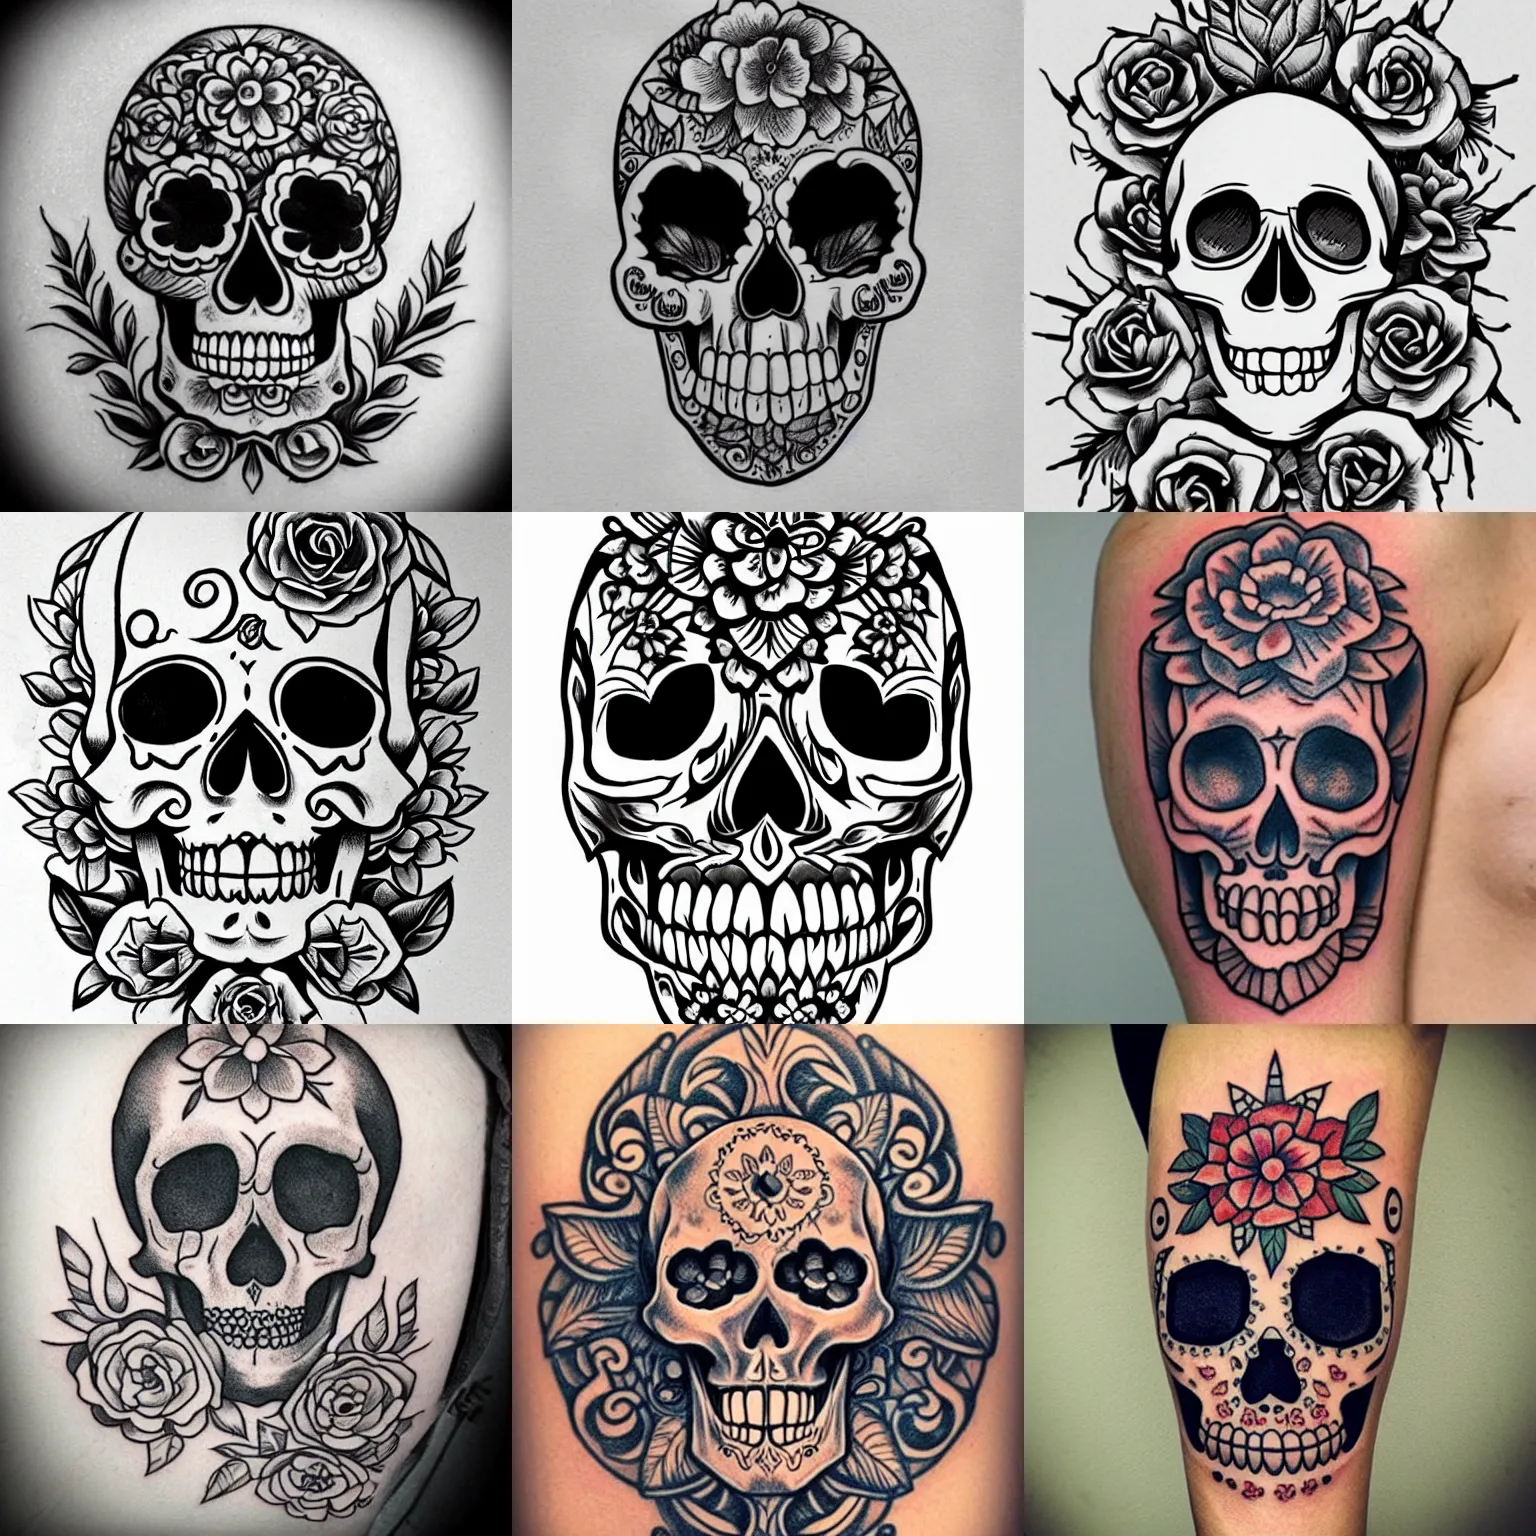 Skull Tattoo Ideas Pinterest Merch & Gifts for Sale | Redbubble